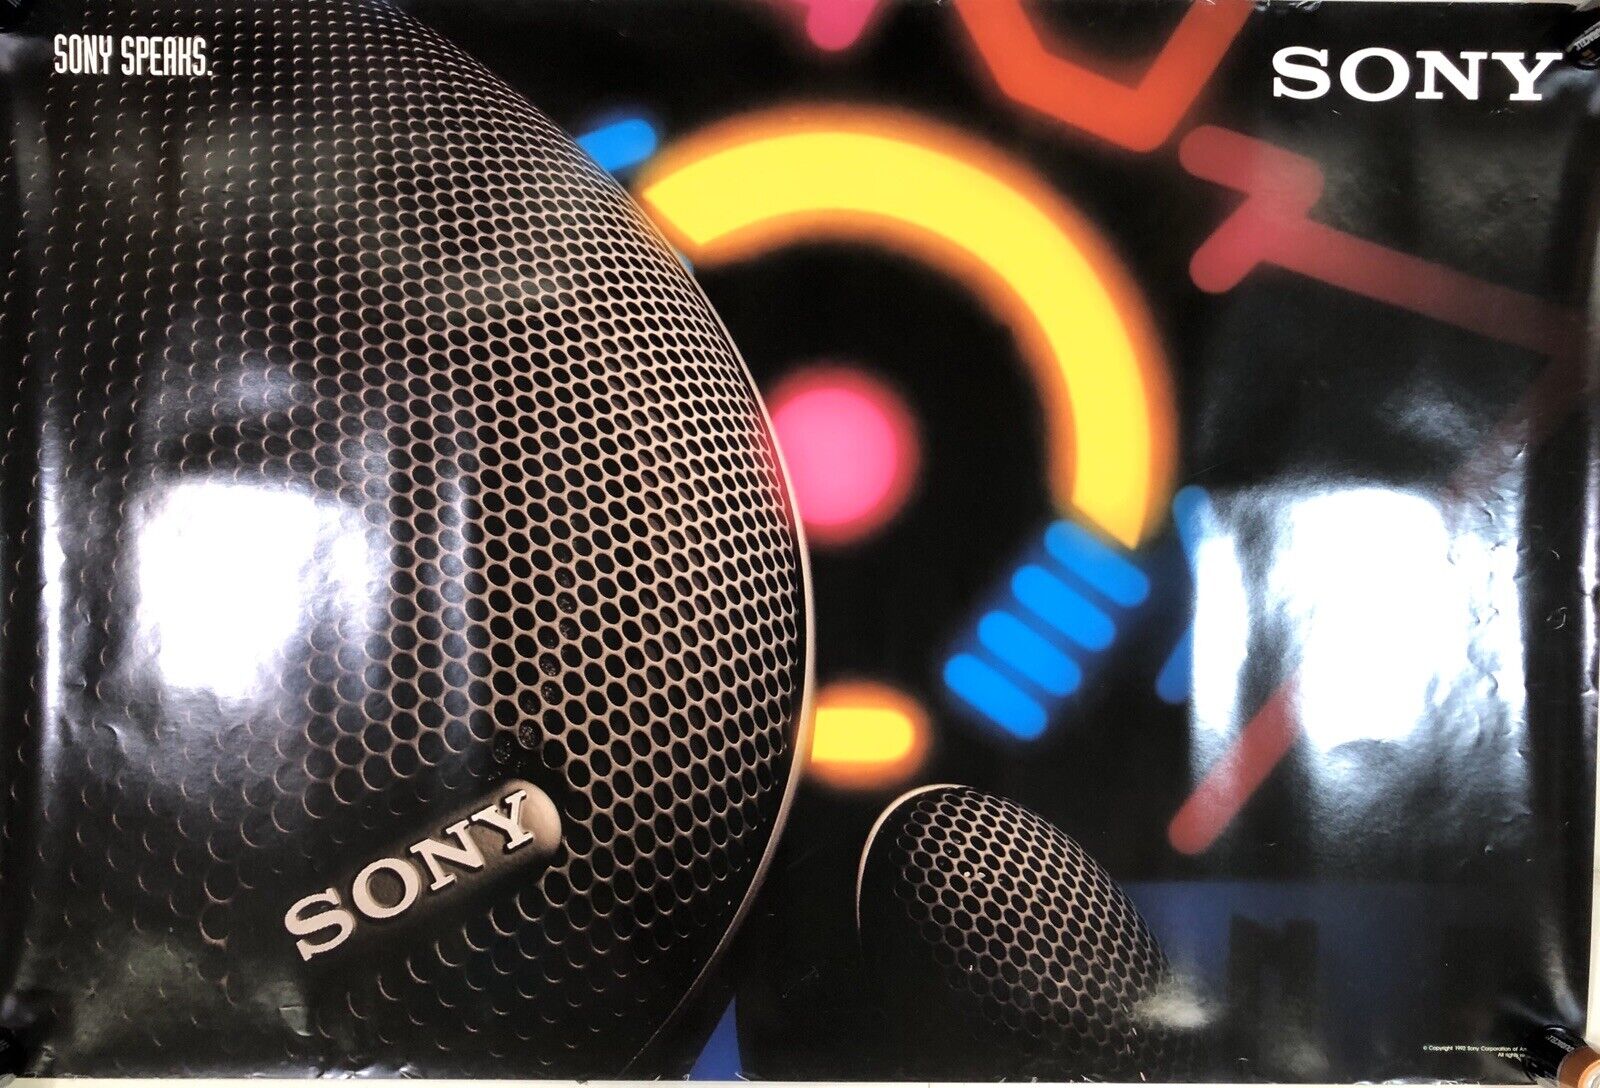 Vintage Sony Speaker Japan Advertising Poster 1992 90s 22 x 33 J26